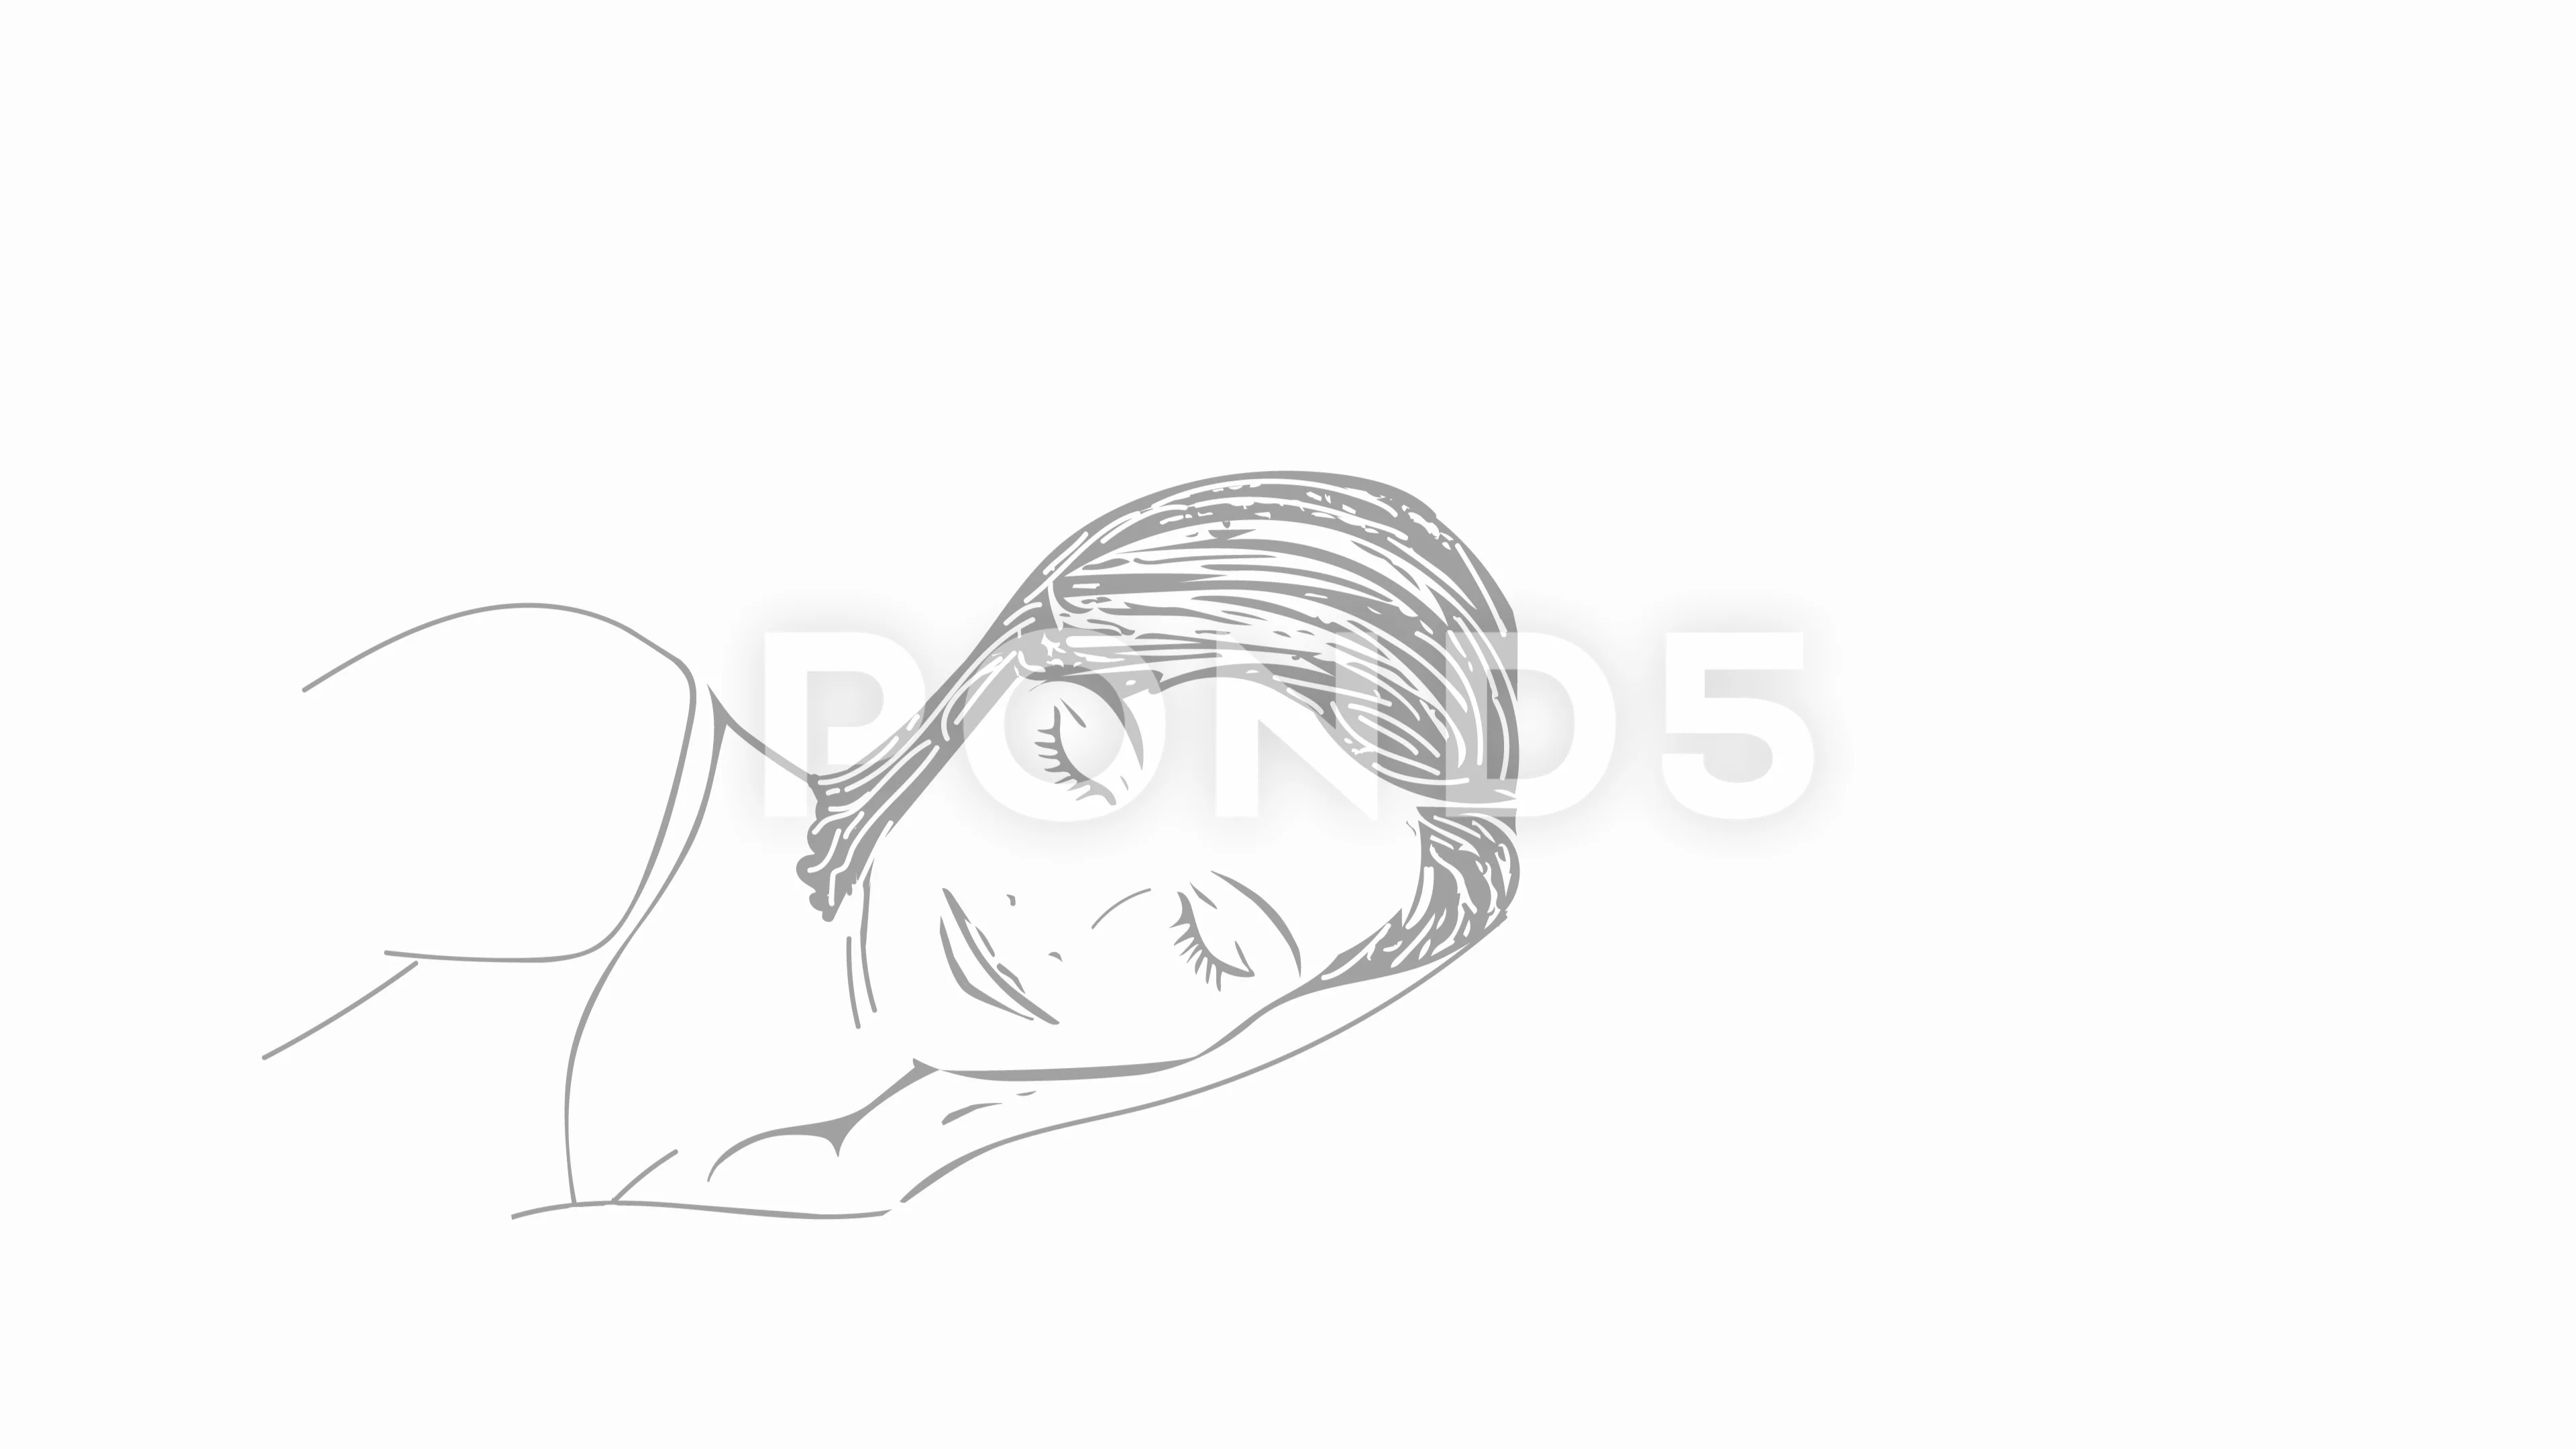 beautiful girl sketch before sleeping by Ondraede on DeviantArt